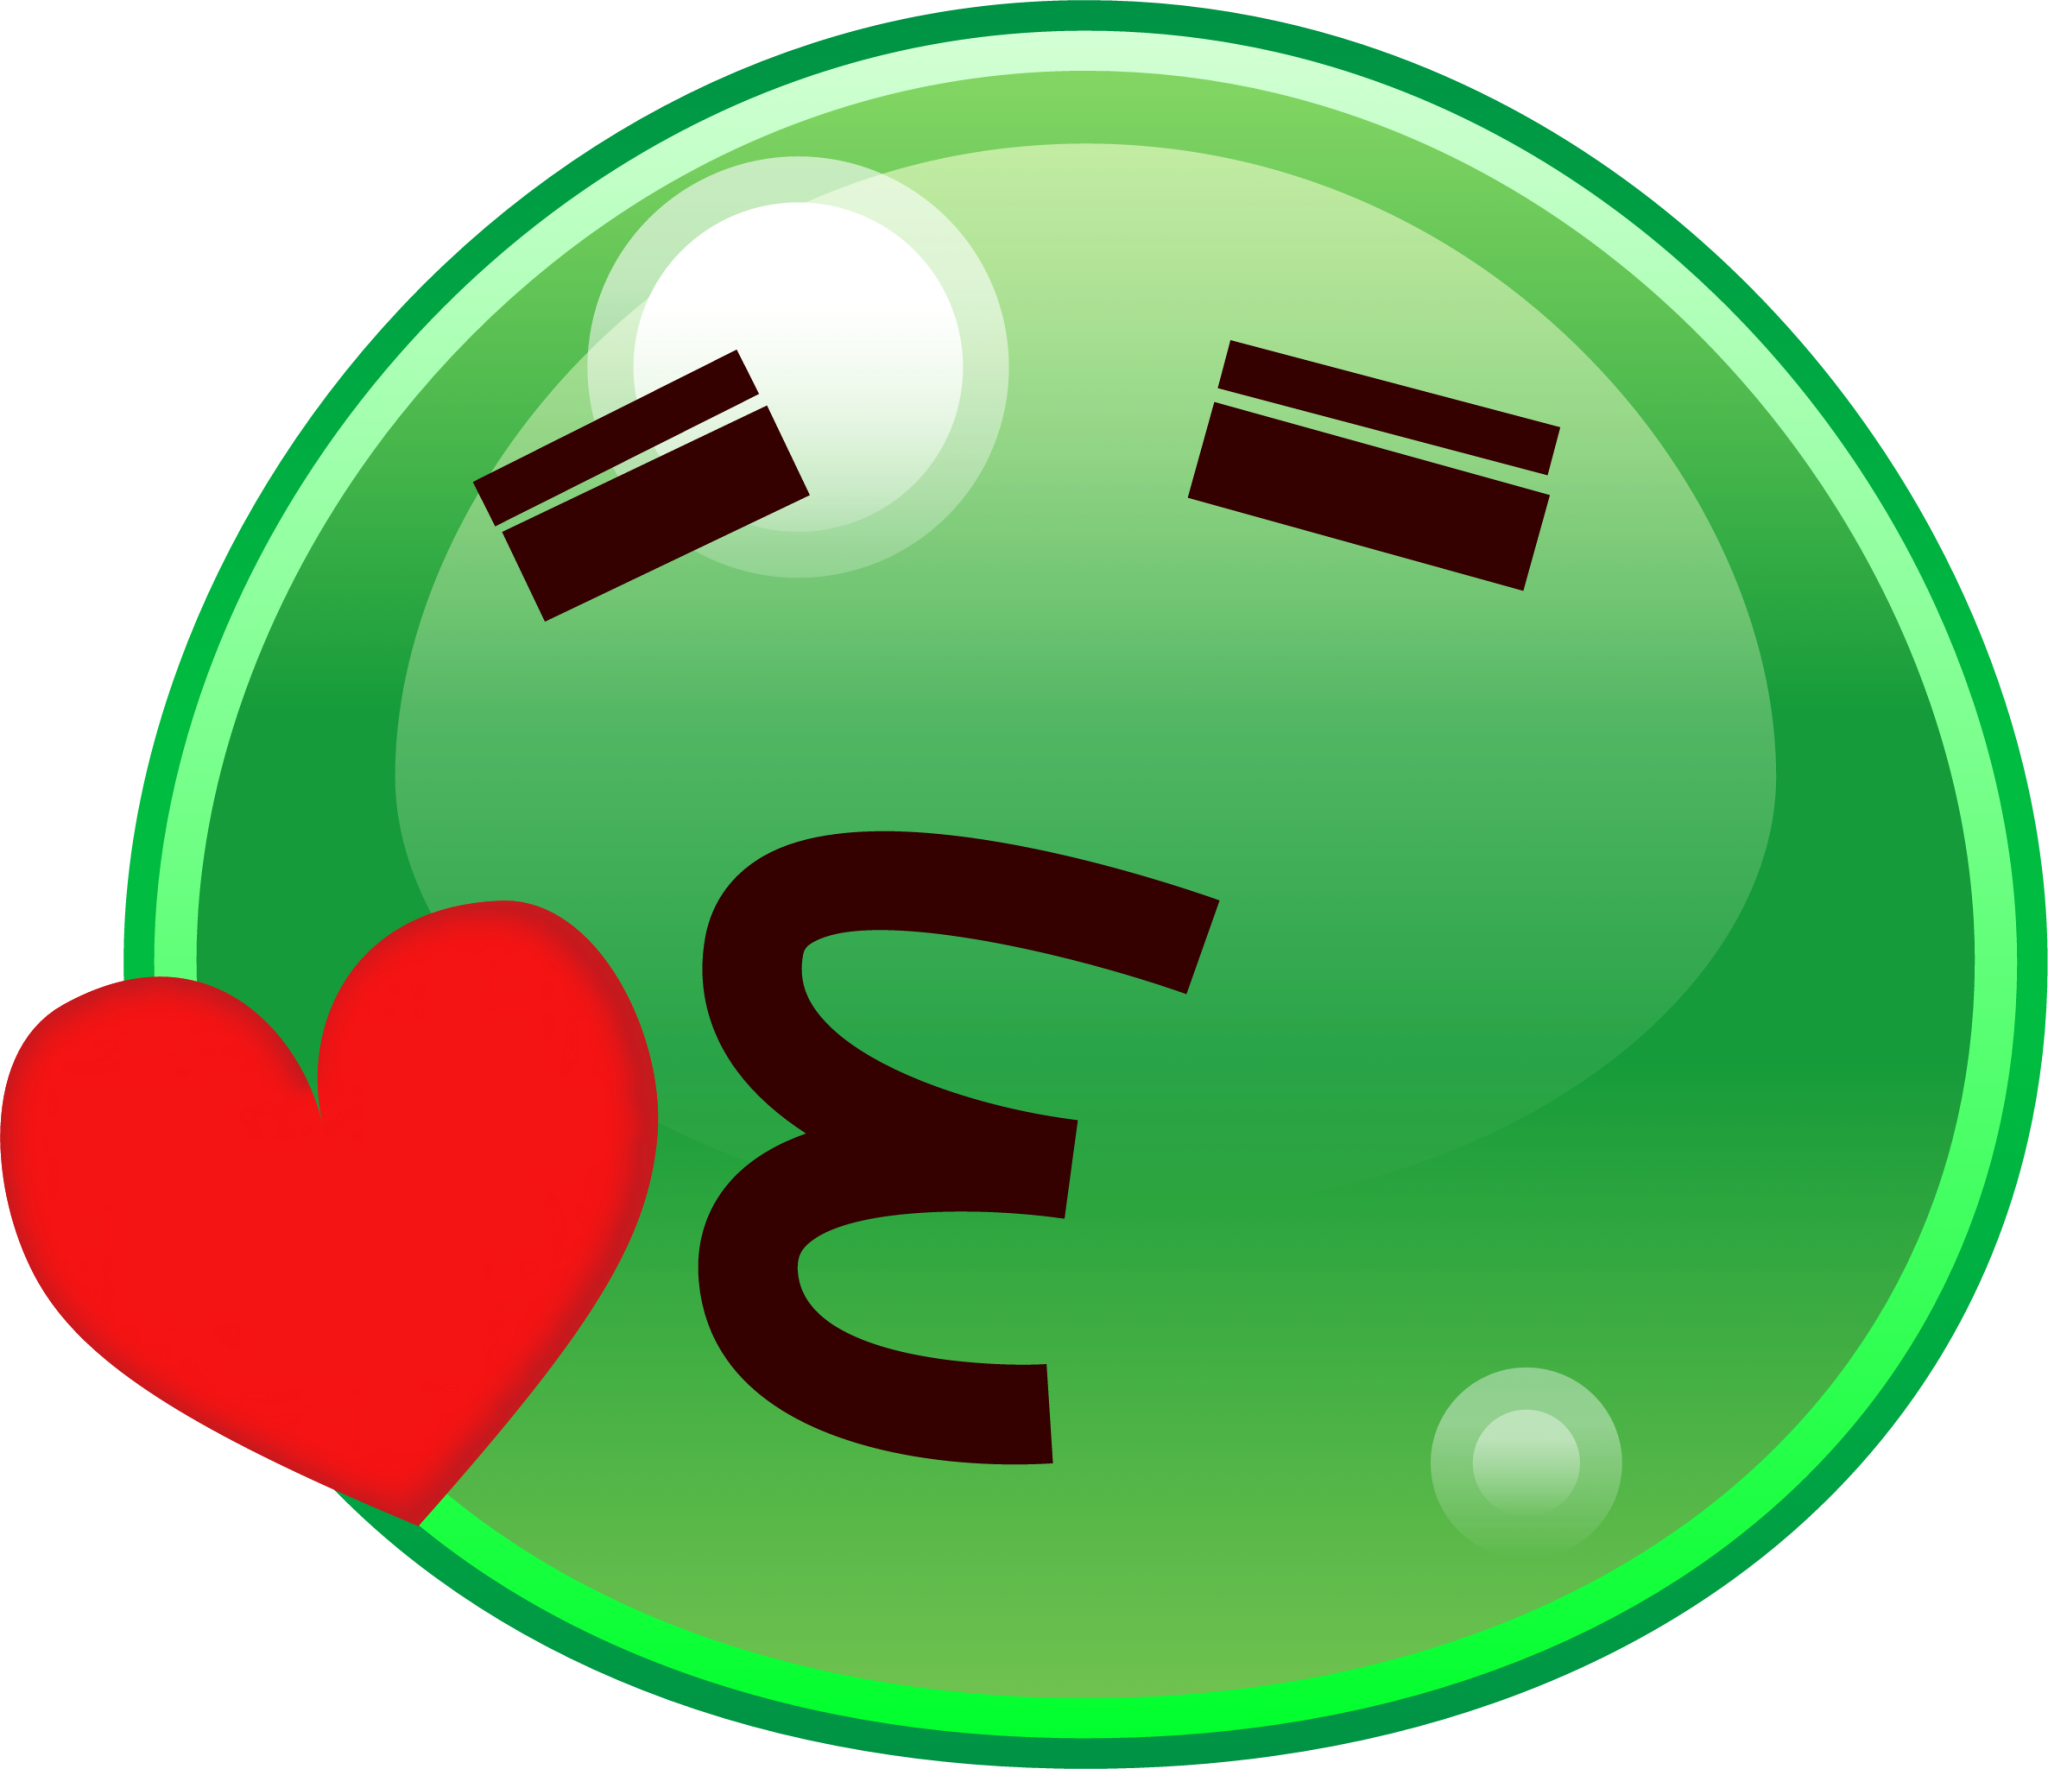 kissing heart (slime) emoji